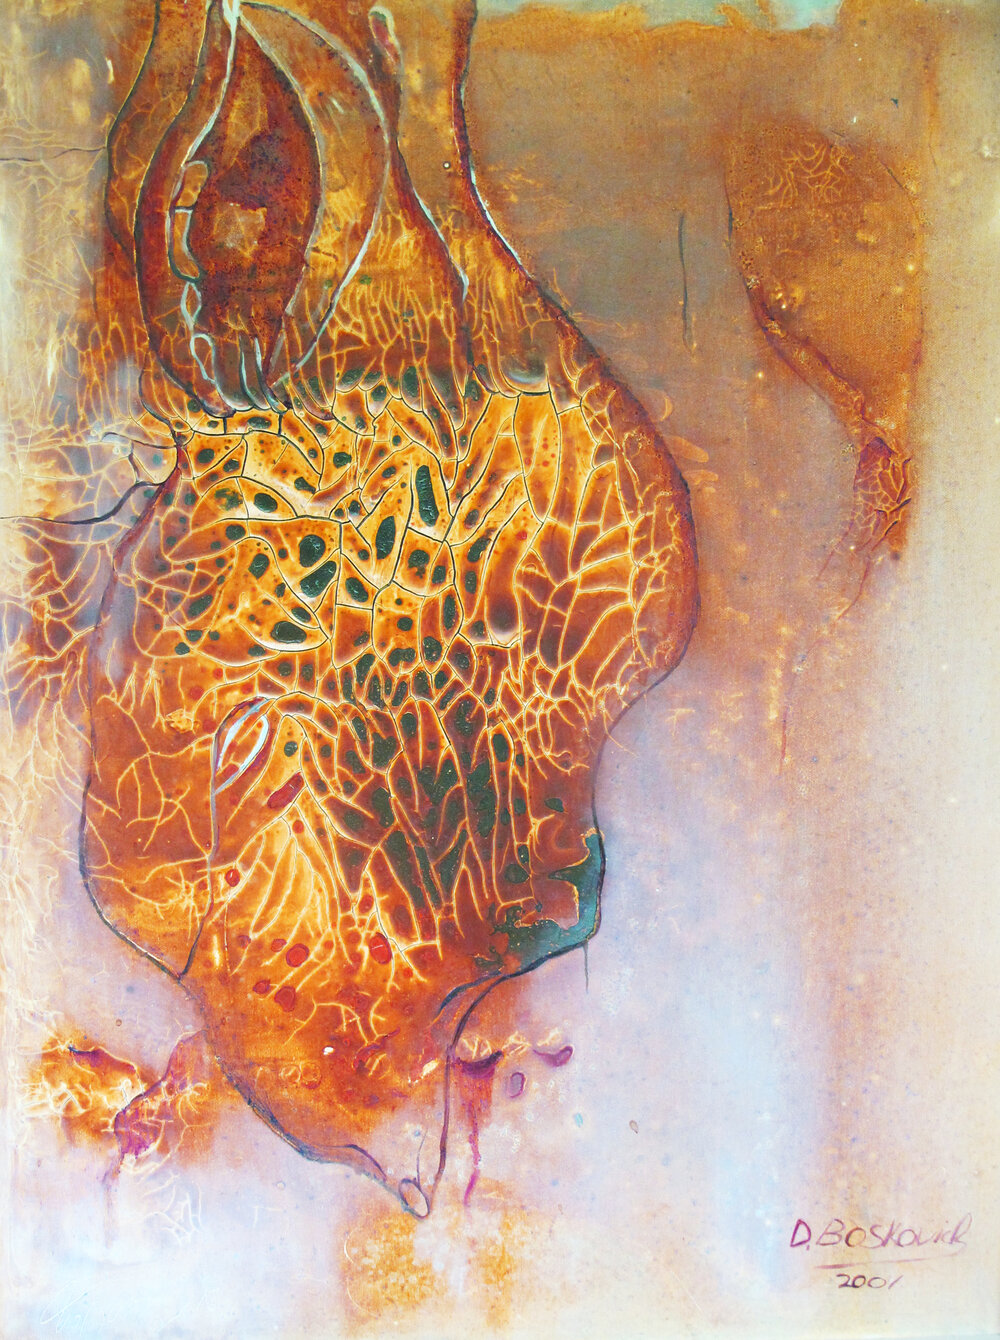 Reddish Soil, Mix Technique On Canvas, 79X59 cm, 2001.jpg